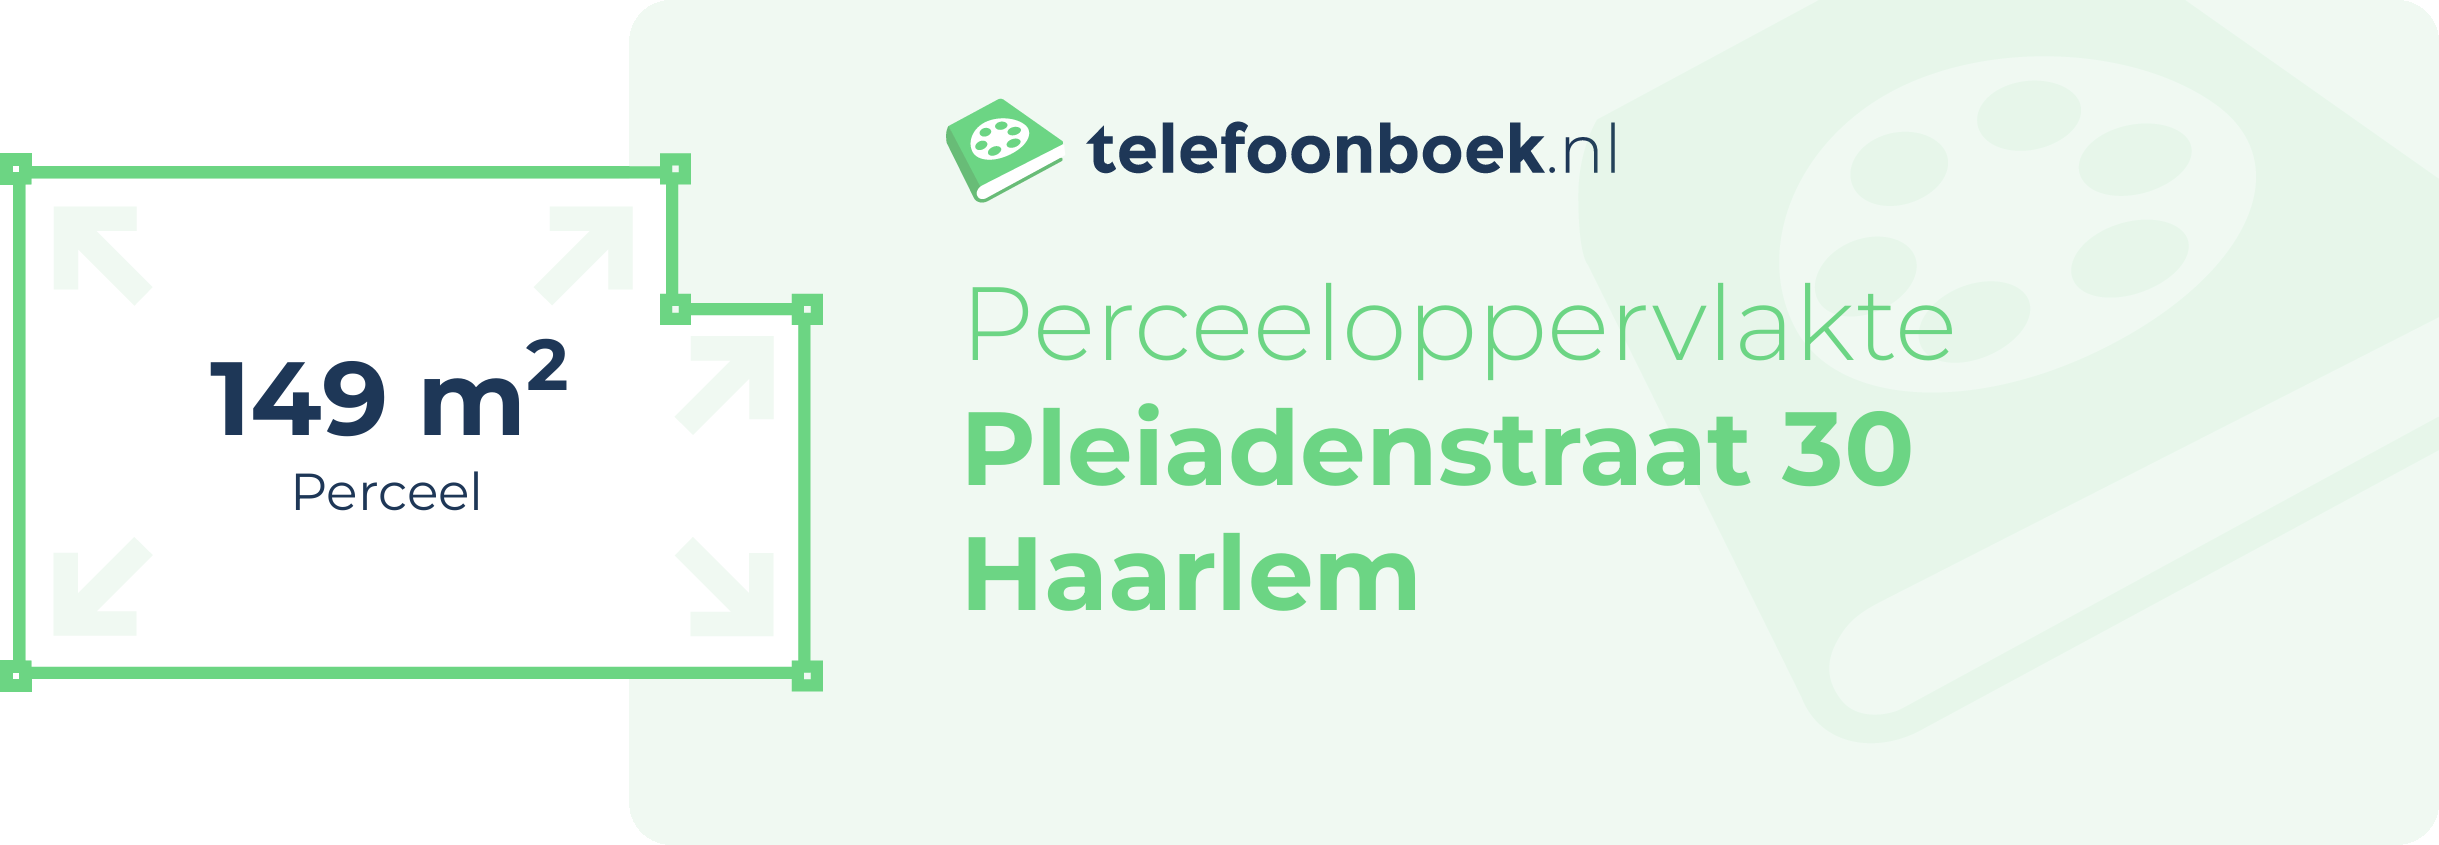 Perceeloppervlakte Pleiadenstraat 30 Haarlem